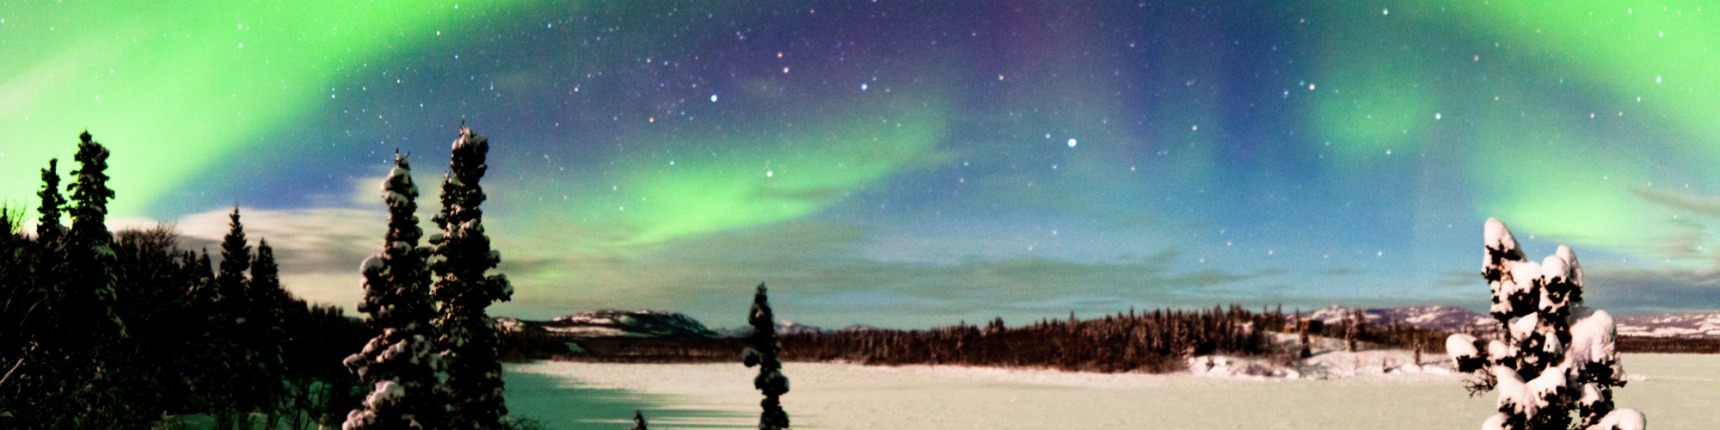 North America Alaska Northern lights